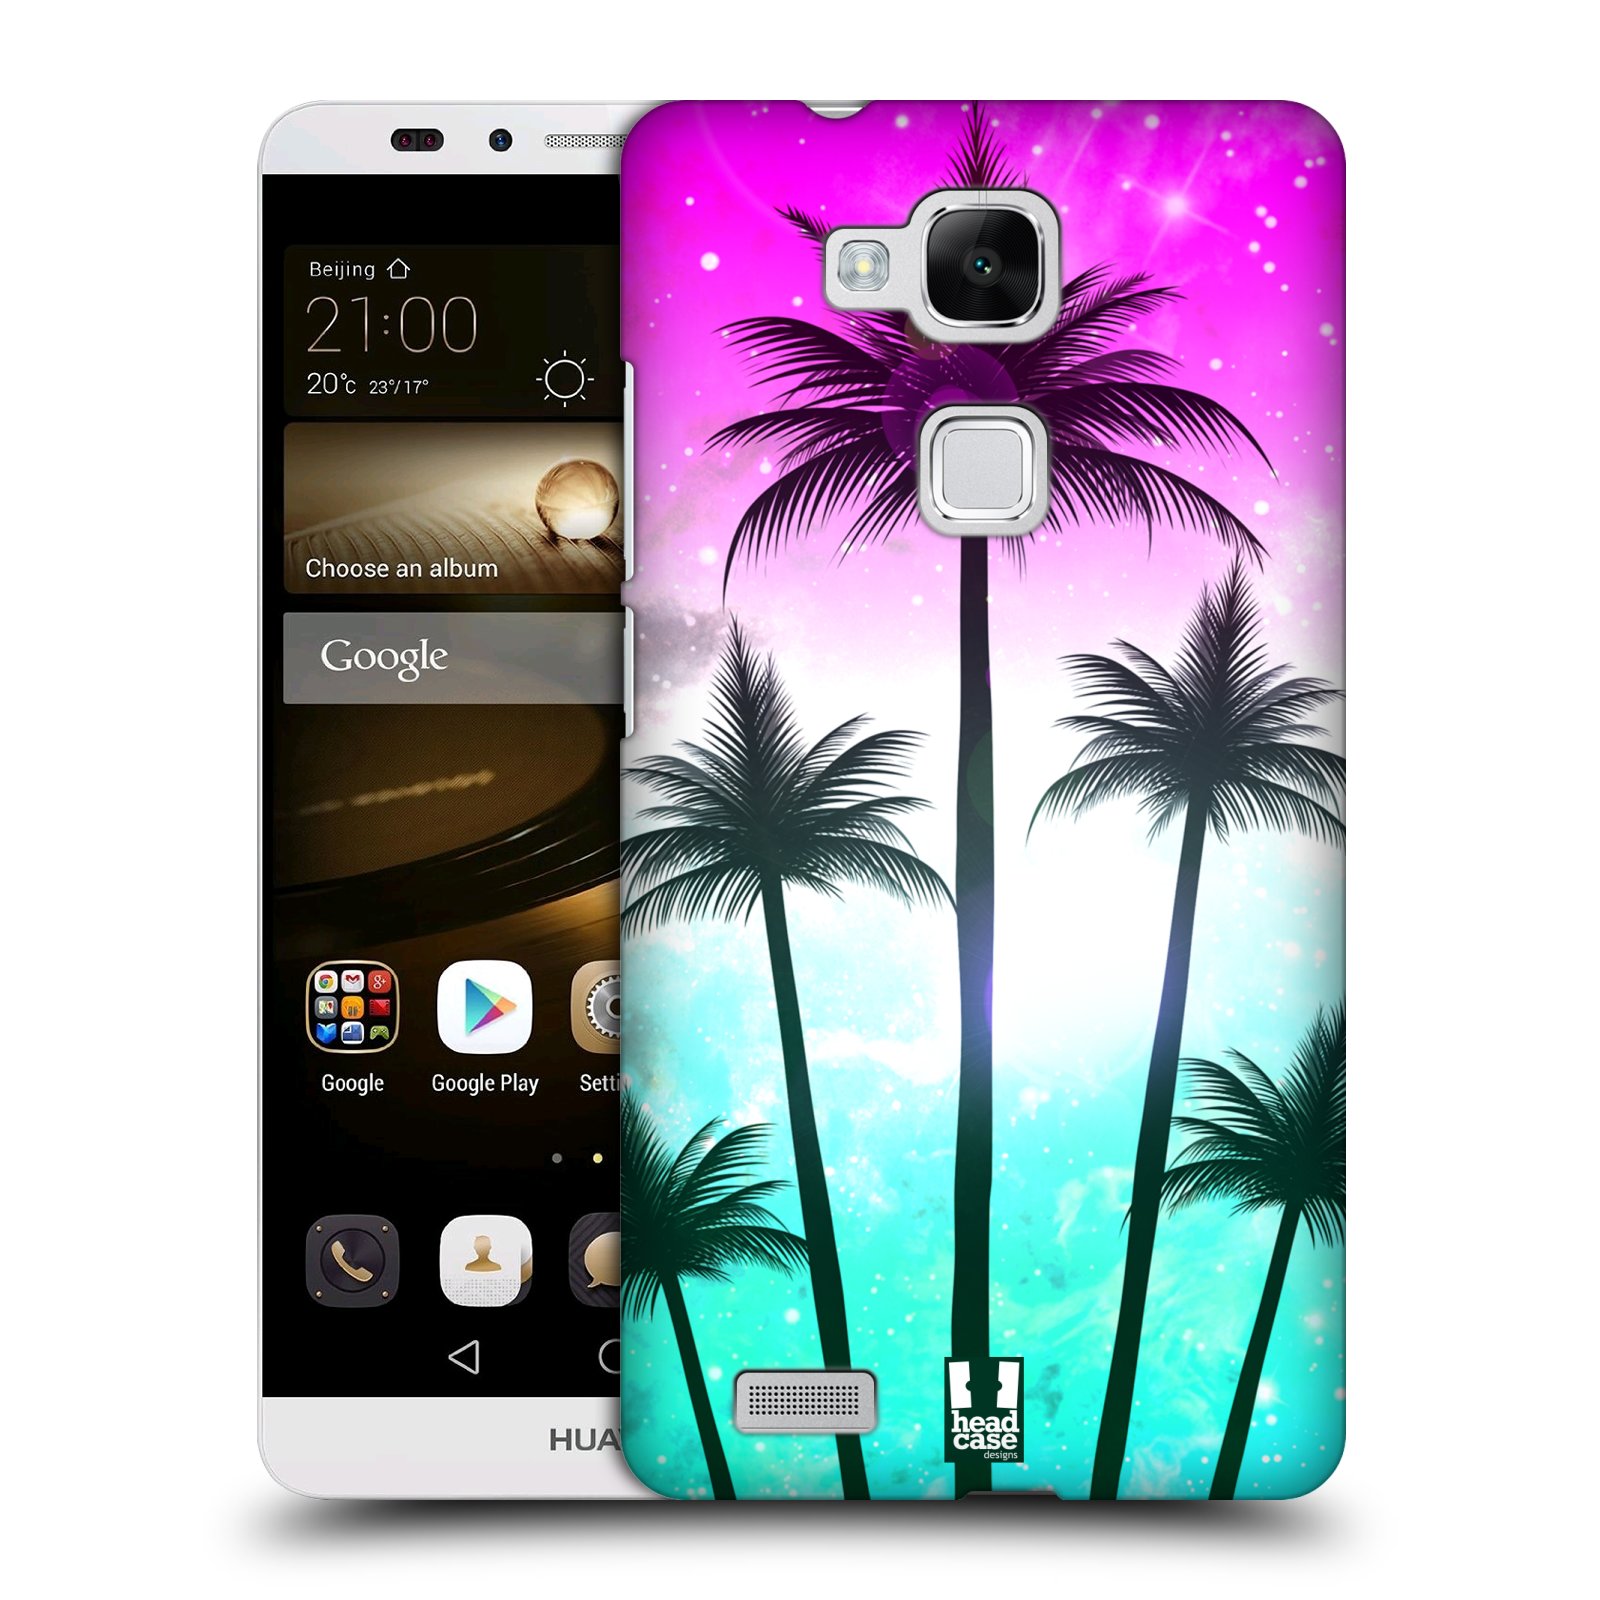 HEAD CASE plastový obal na mobil Huawei Mate 7 vzor Kreslený motiv silueta moře a palmy RŮŽOVÁ A TYRKYS